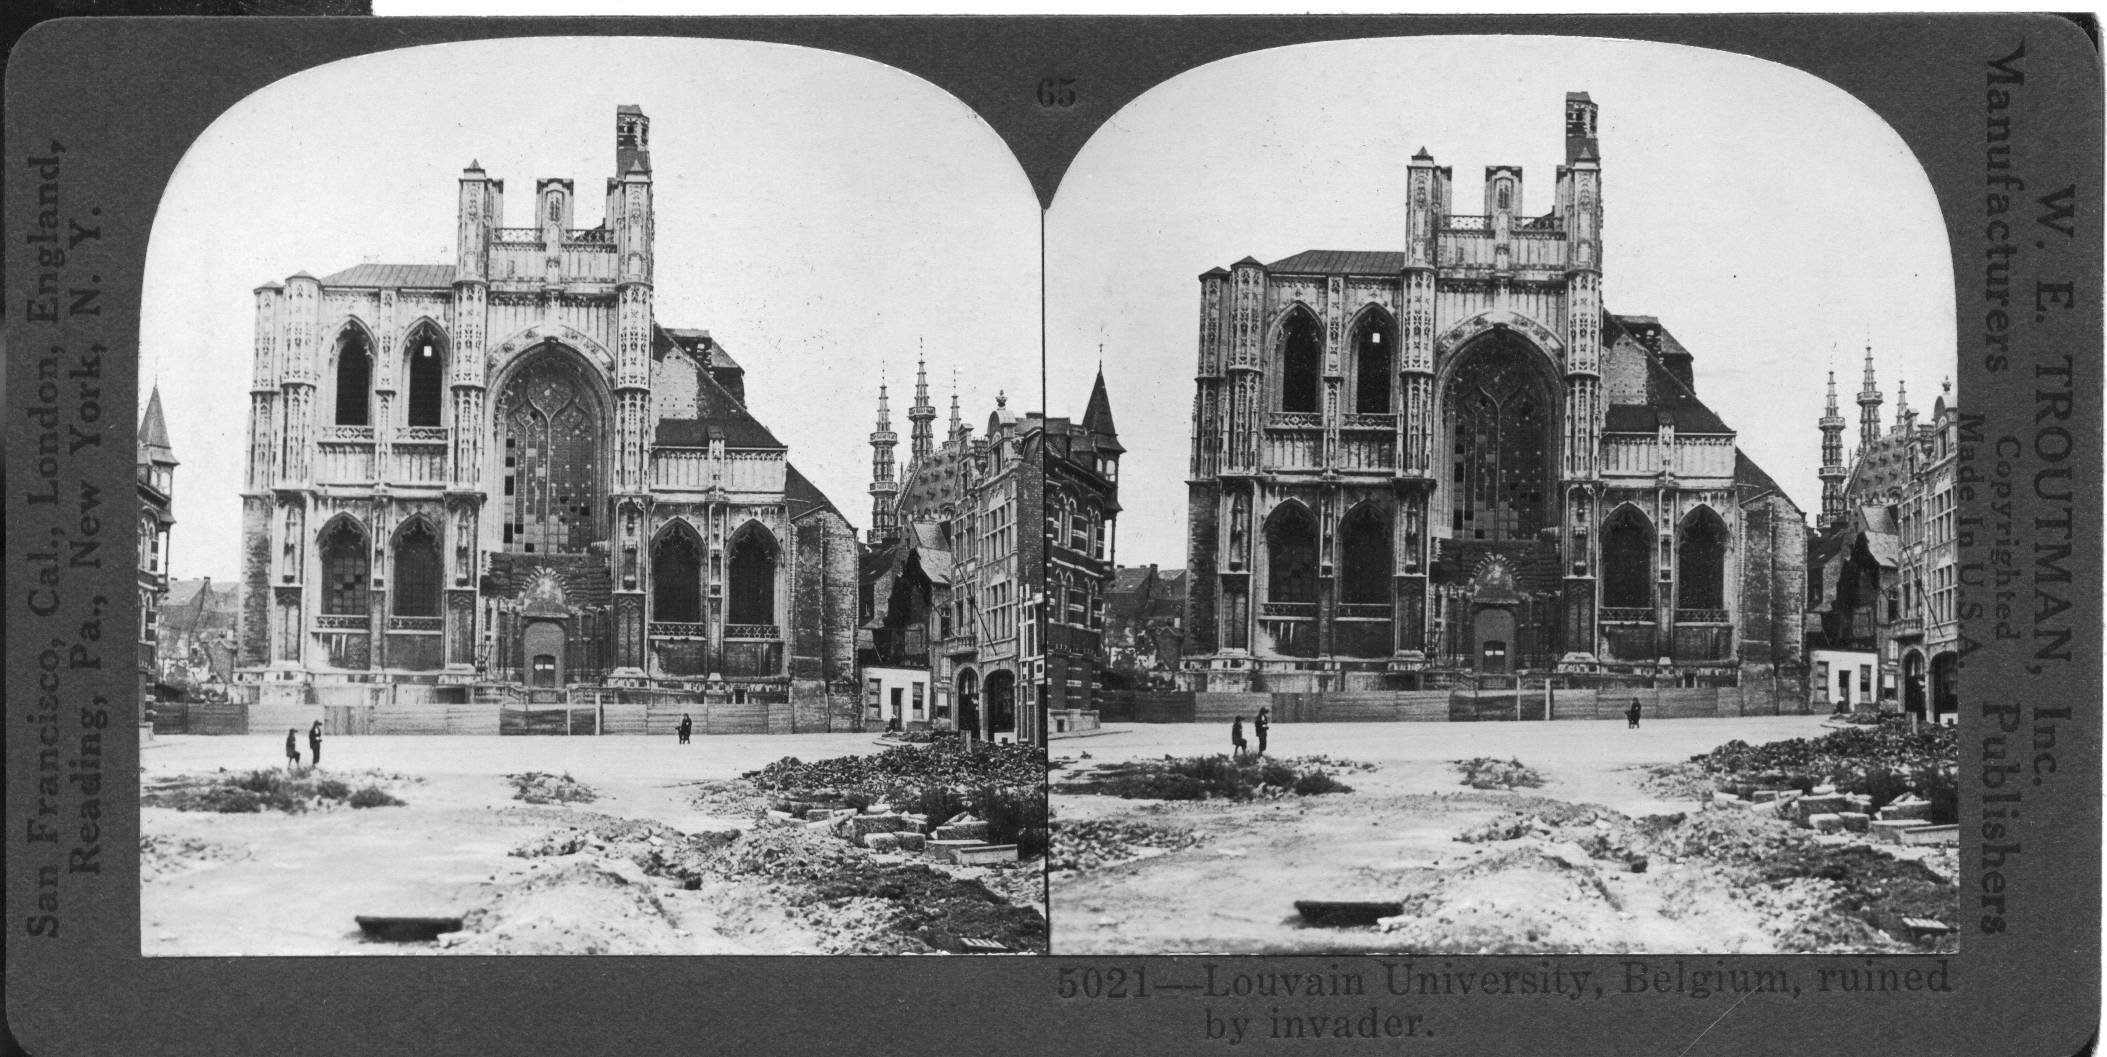 Louvain University, Belgium, ruined by invader